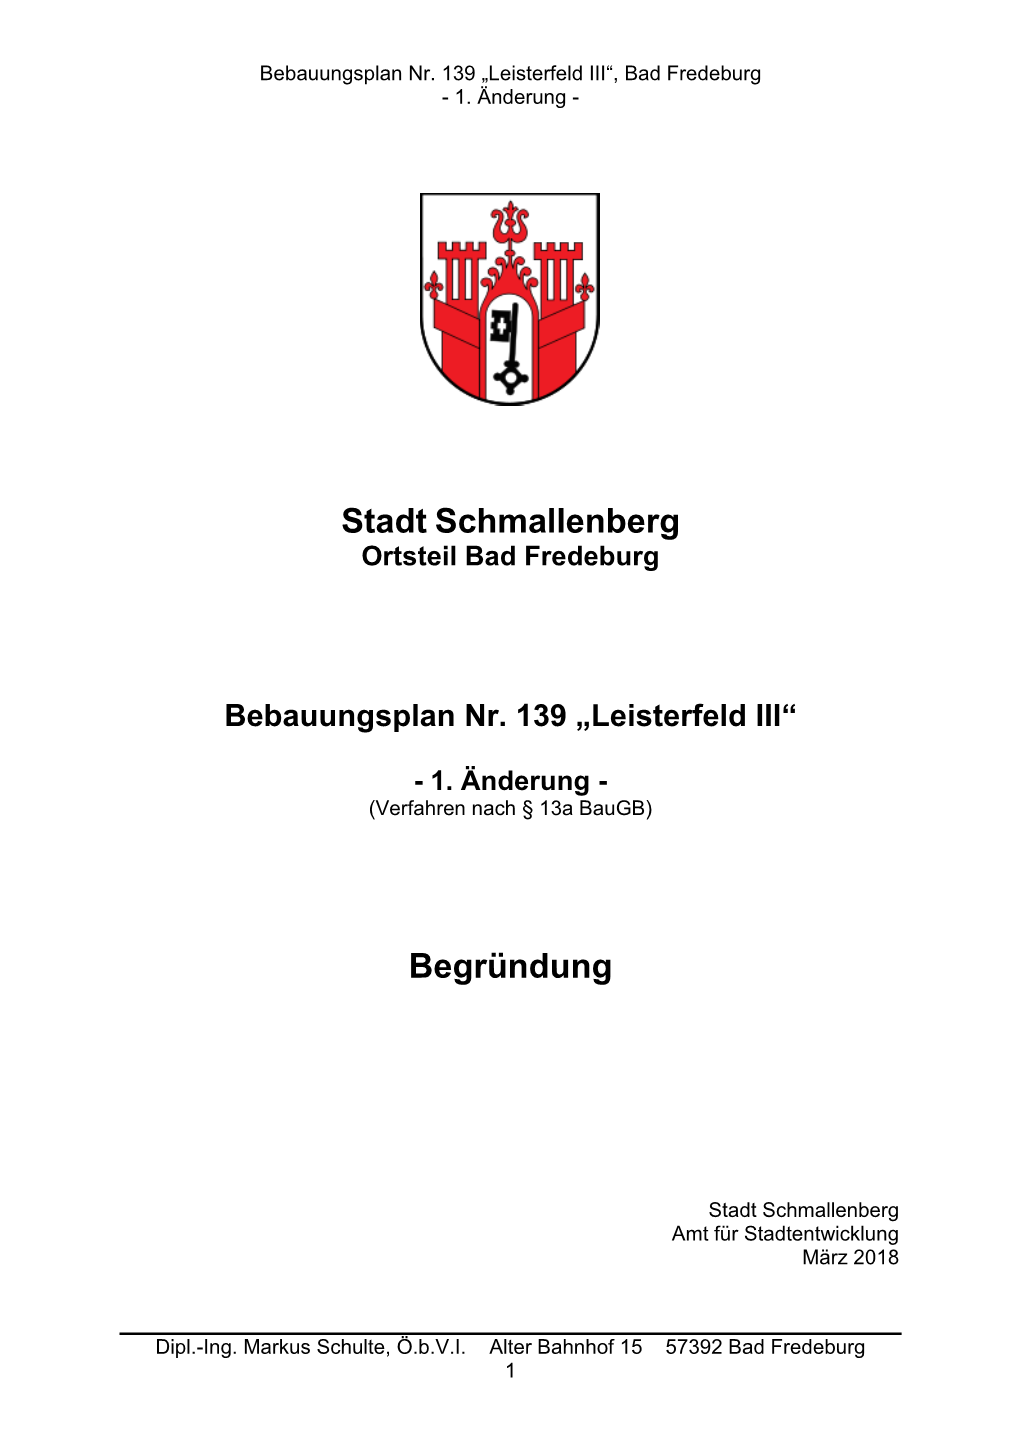 Stadt Schmallenberg Begründung